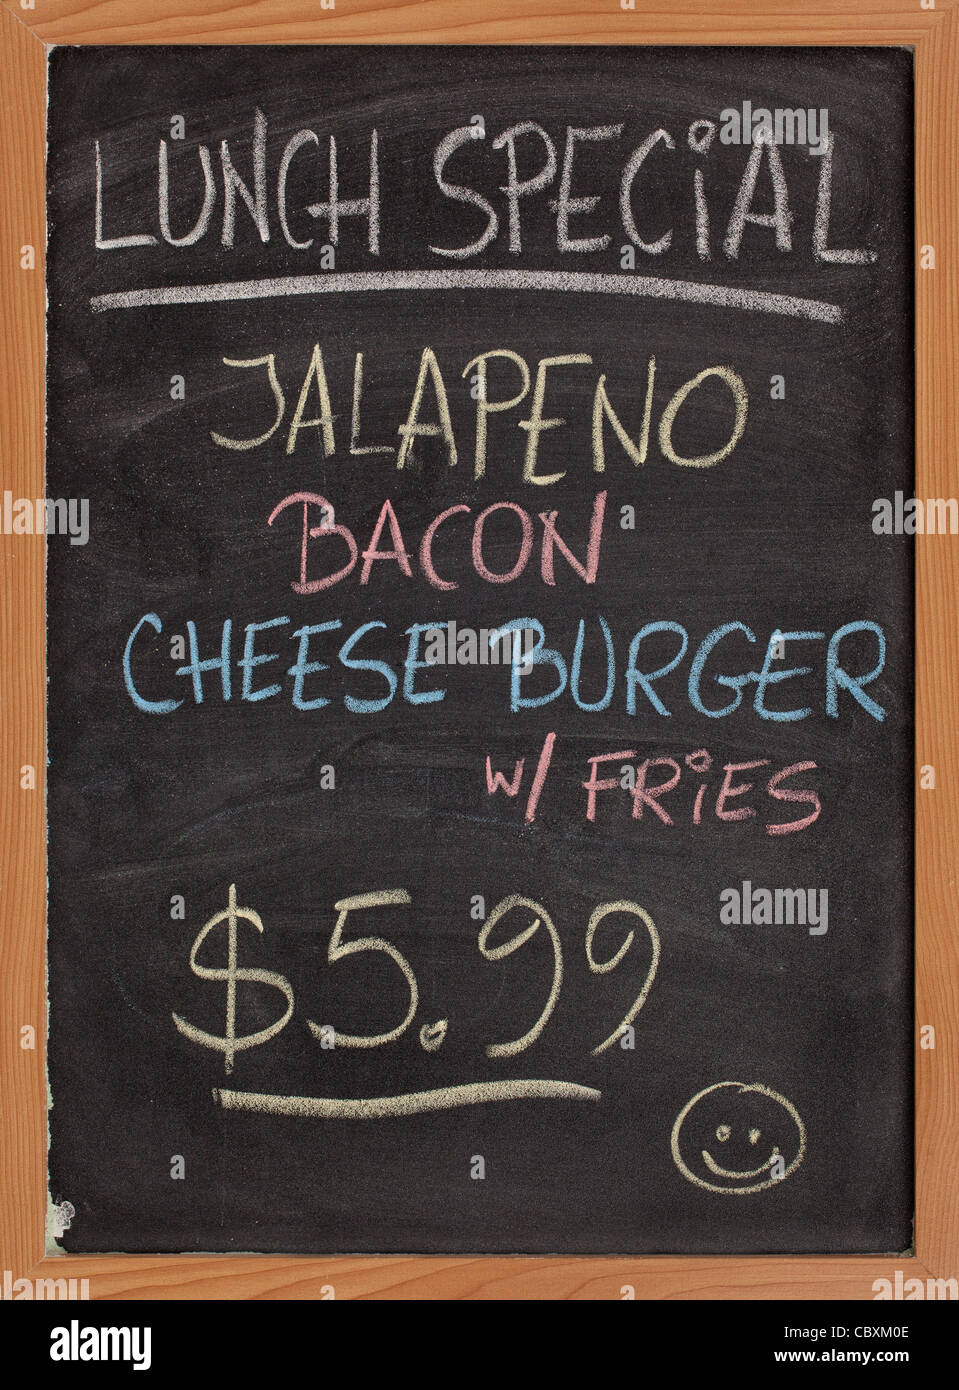 Jalapeno, Speck, Käse Burger, Pommes frites - spezielles Mittagsmenü - vertikale Tafel Schild mit Farbe Kreide Handschrift Stockfoto